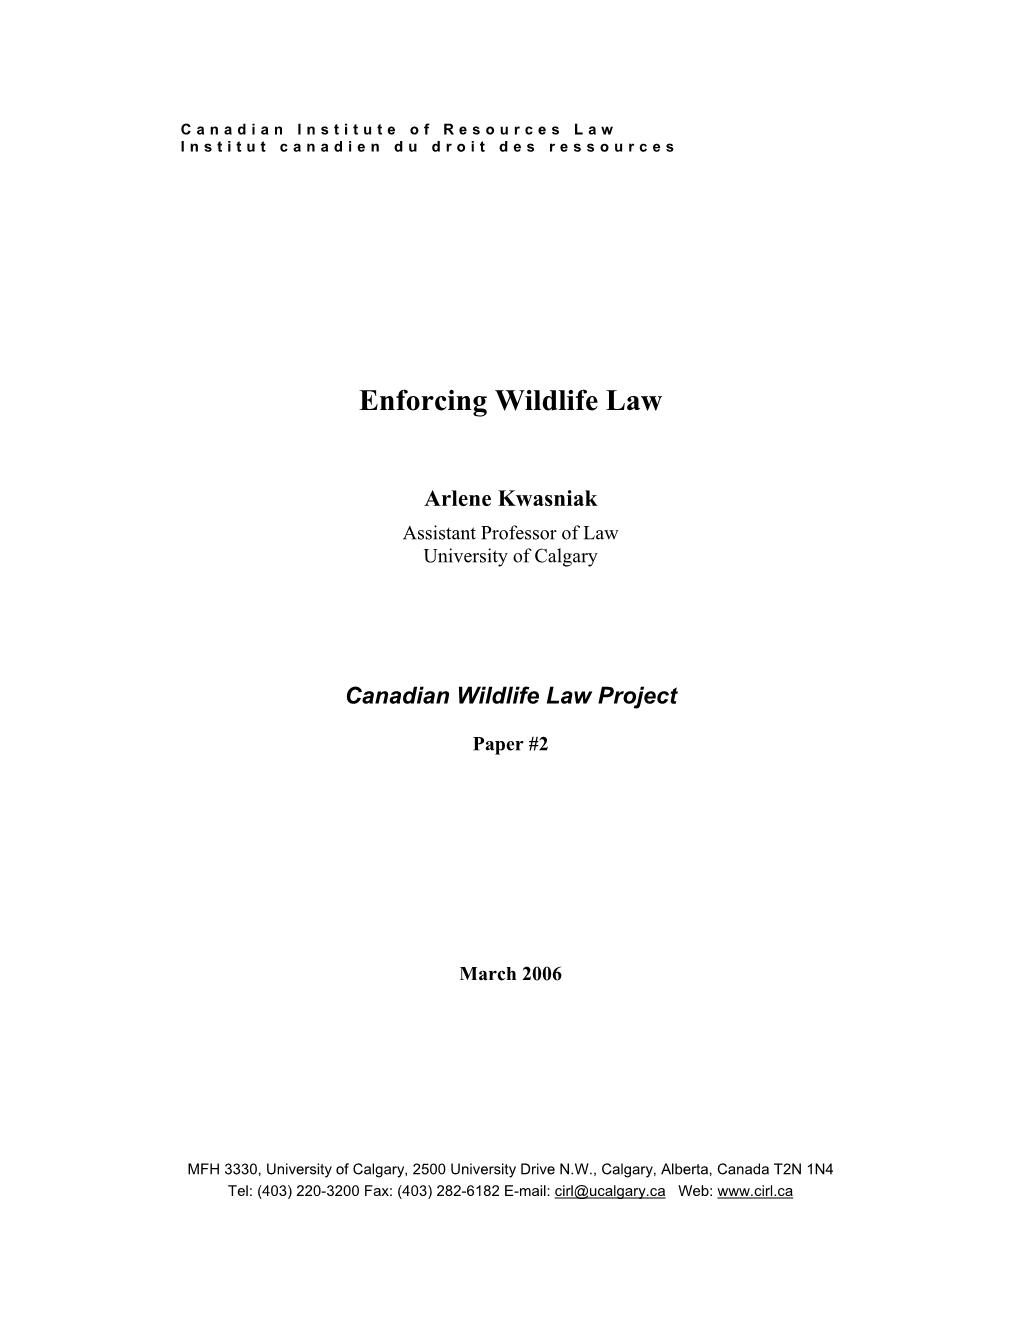 Enforcing Wildlife Law